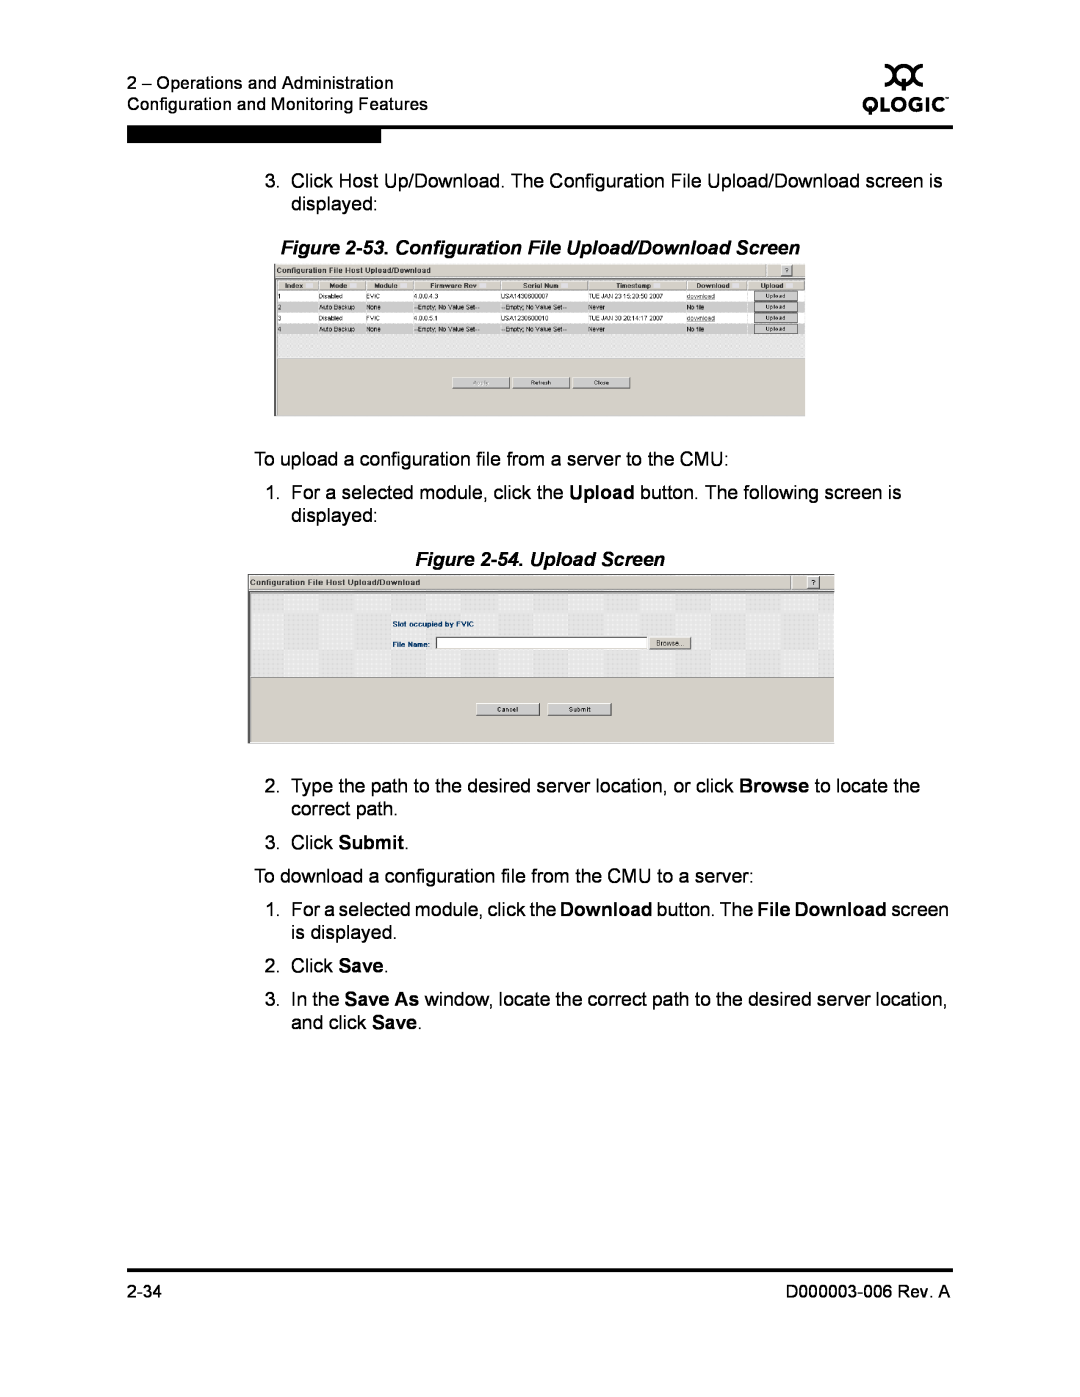 Q-Logic 9000 manual 53. Configuration File Upload/Download Screen, 54. Upload Screen 